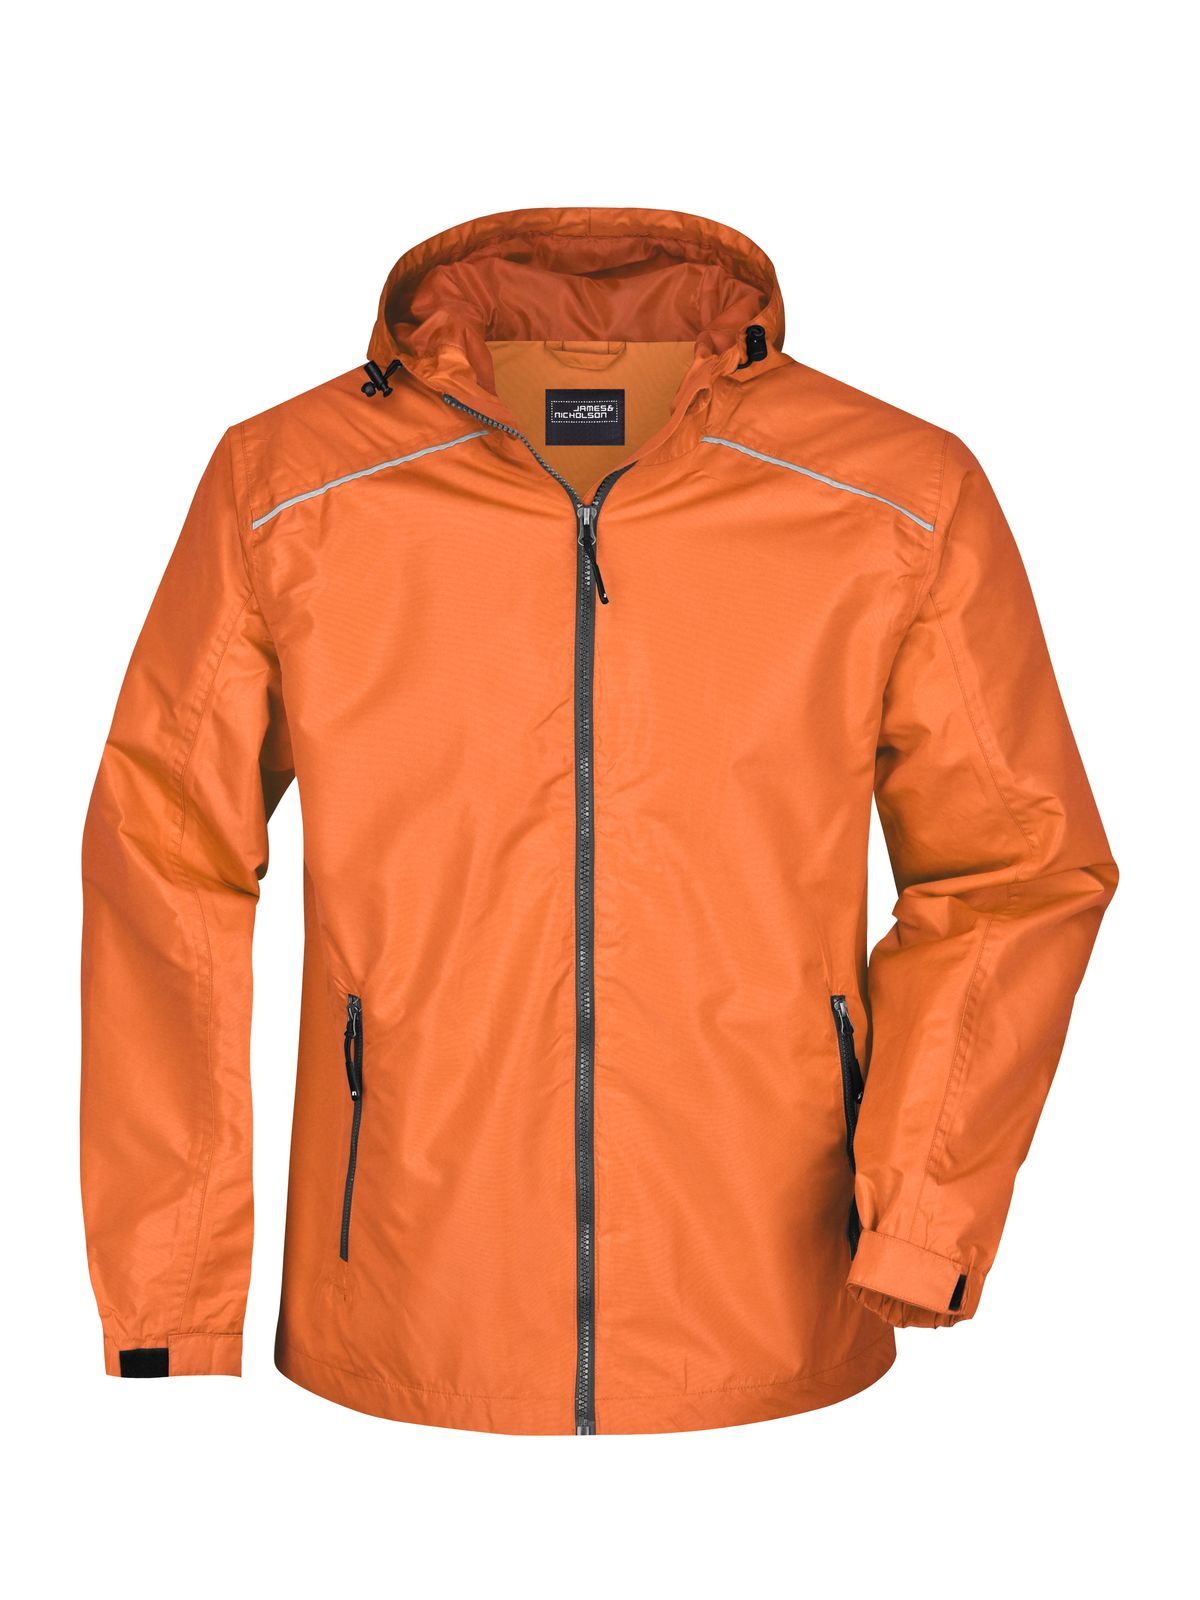 mens-rain-jacket-orange-carbon.webp